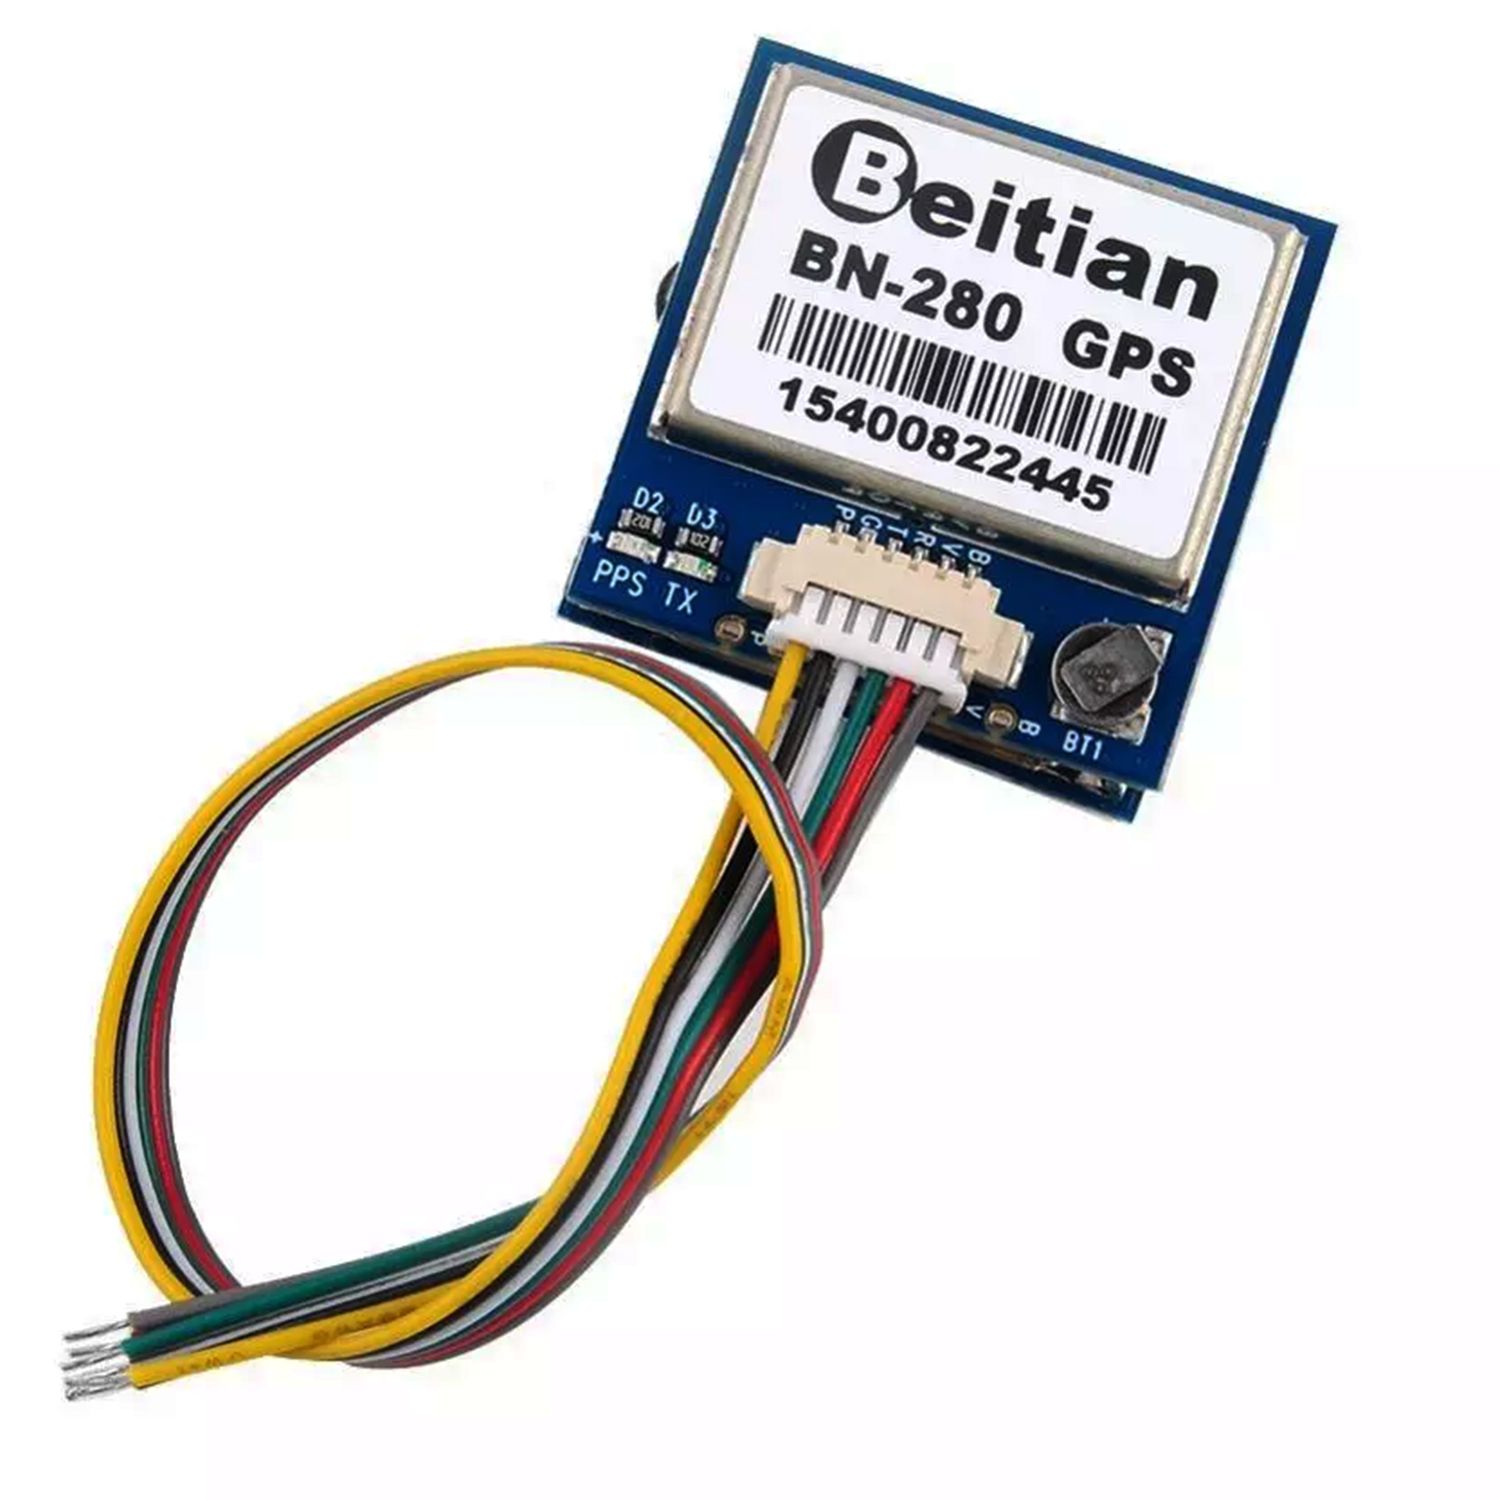 Модуль Ublox GPS Beitian BN-280D з компасом